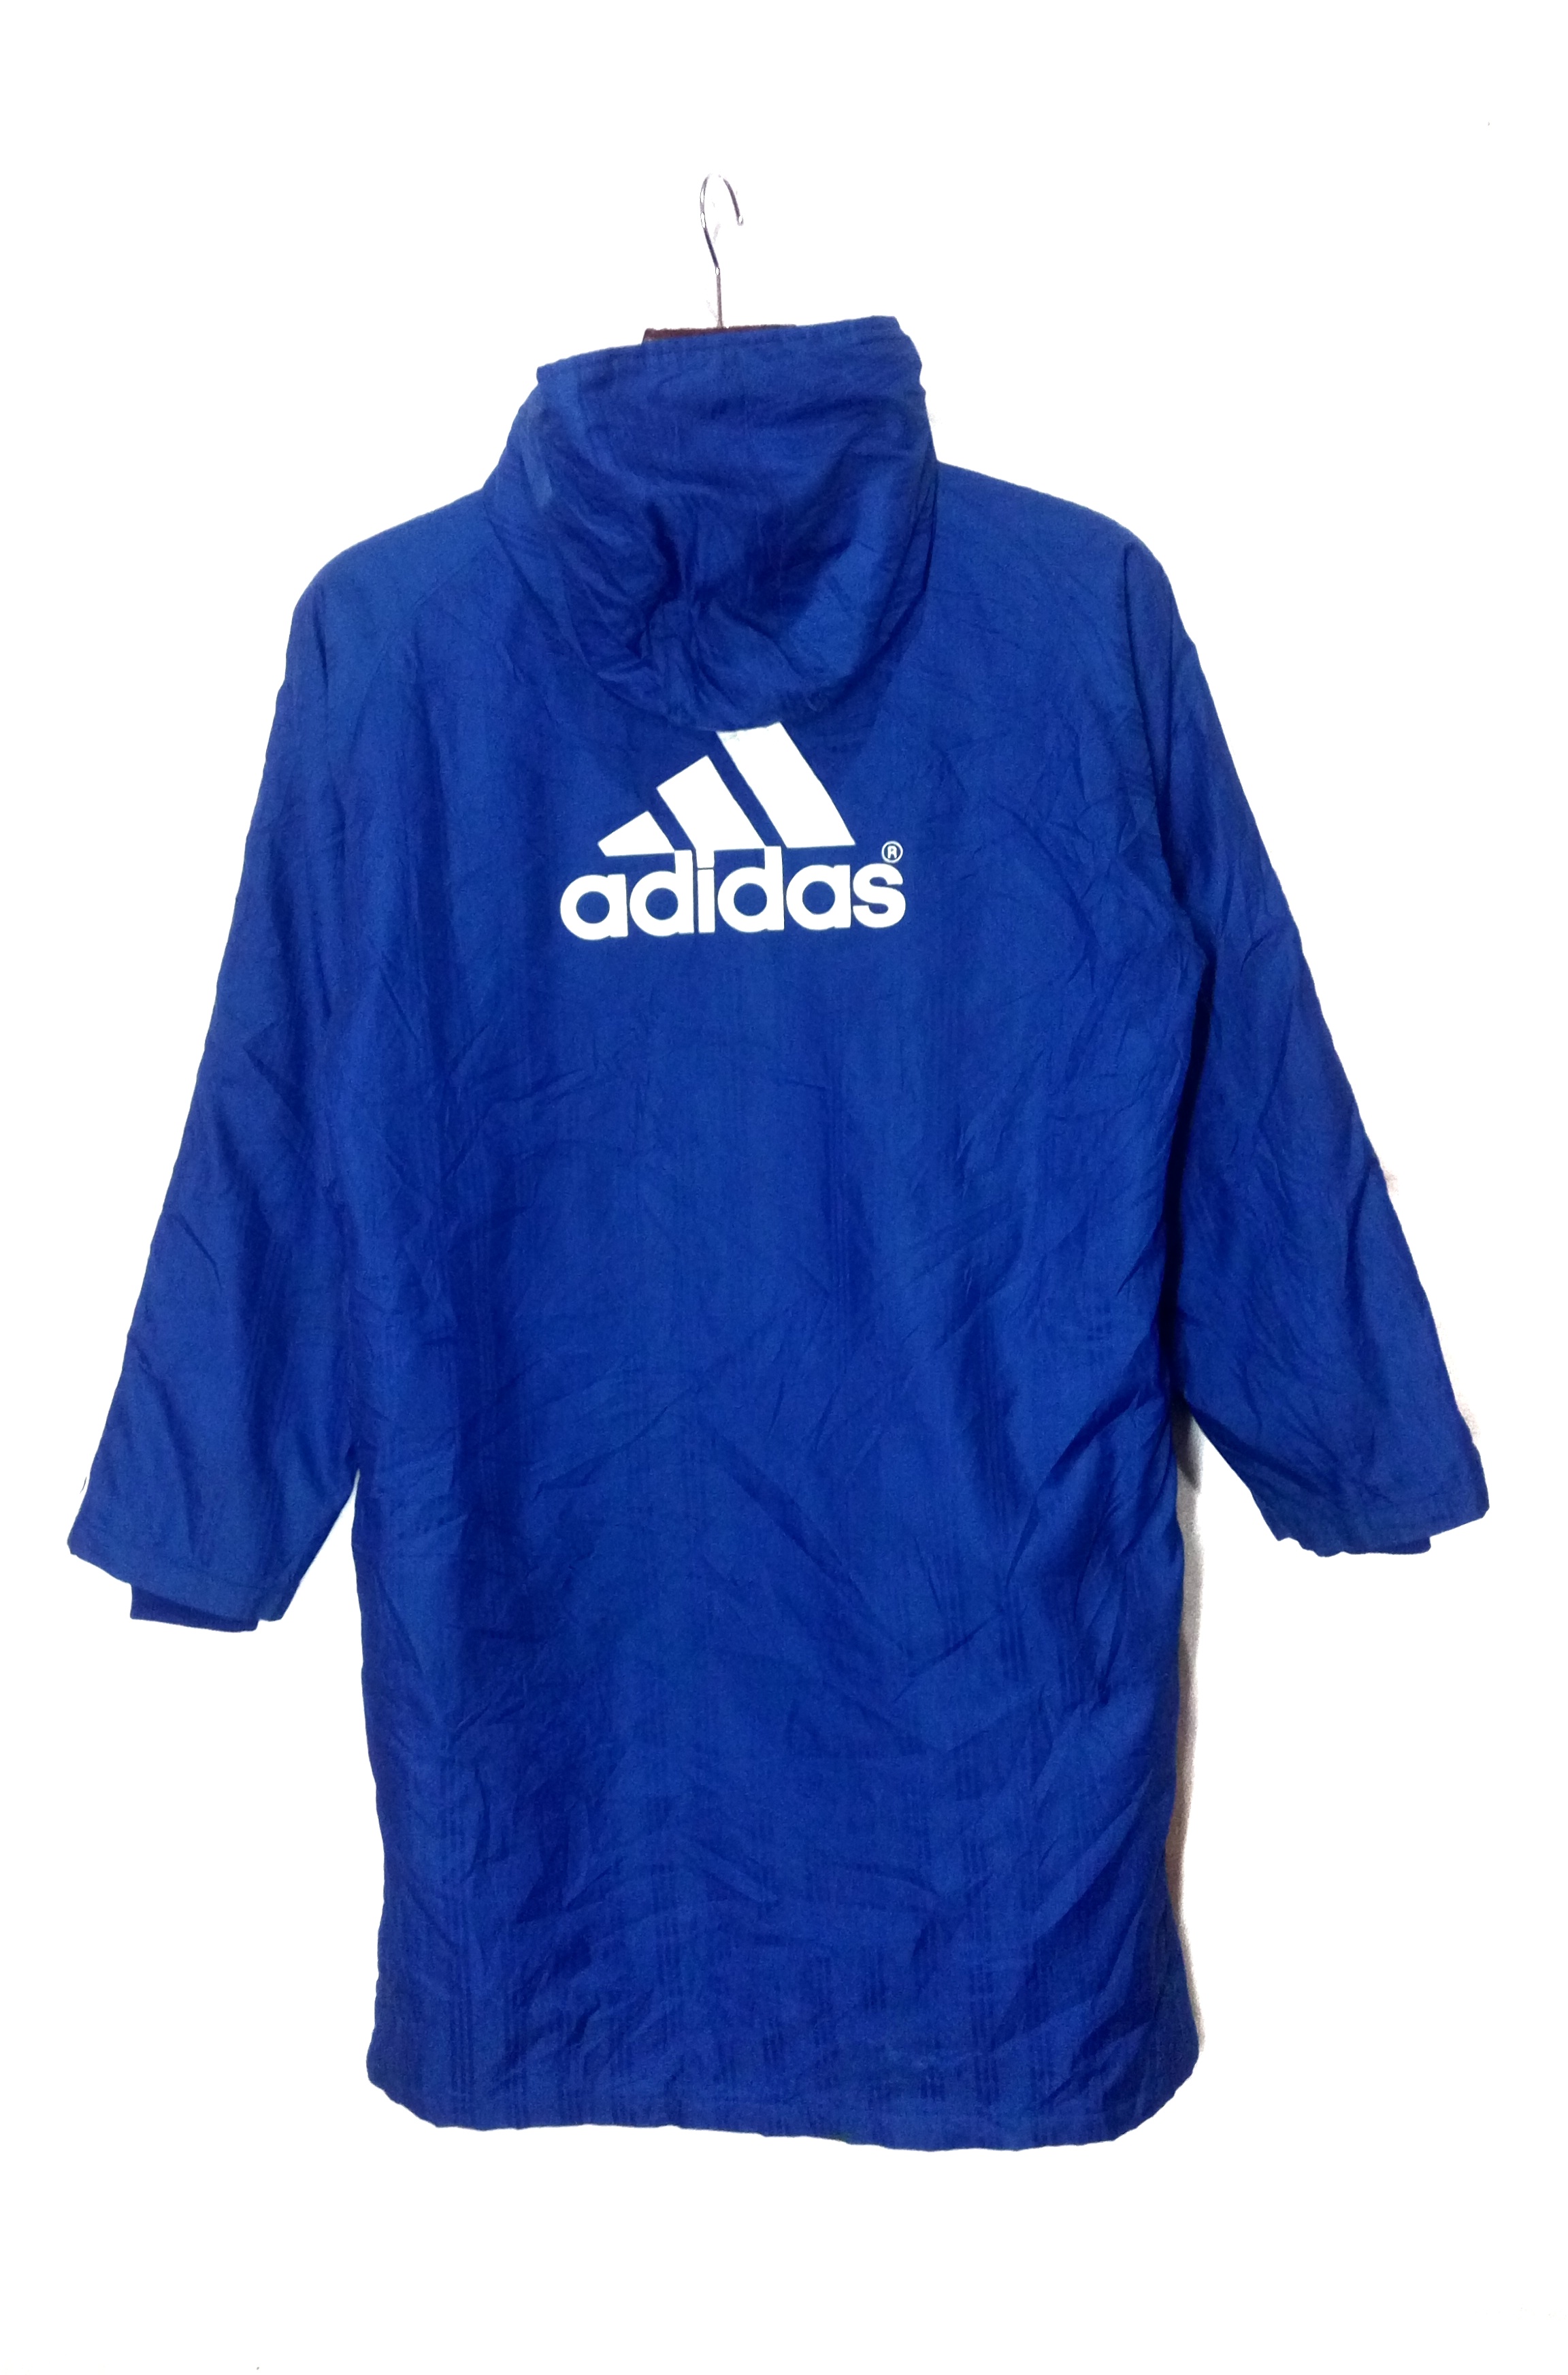 Adidas big logo sherpa inner lining long jacket hoodie parka winter size M/L - 2